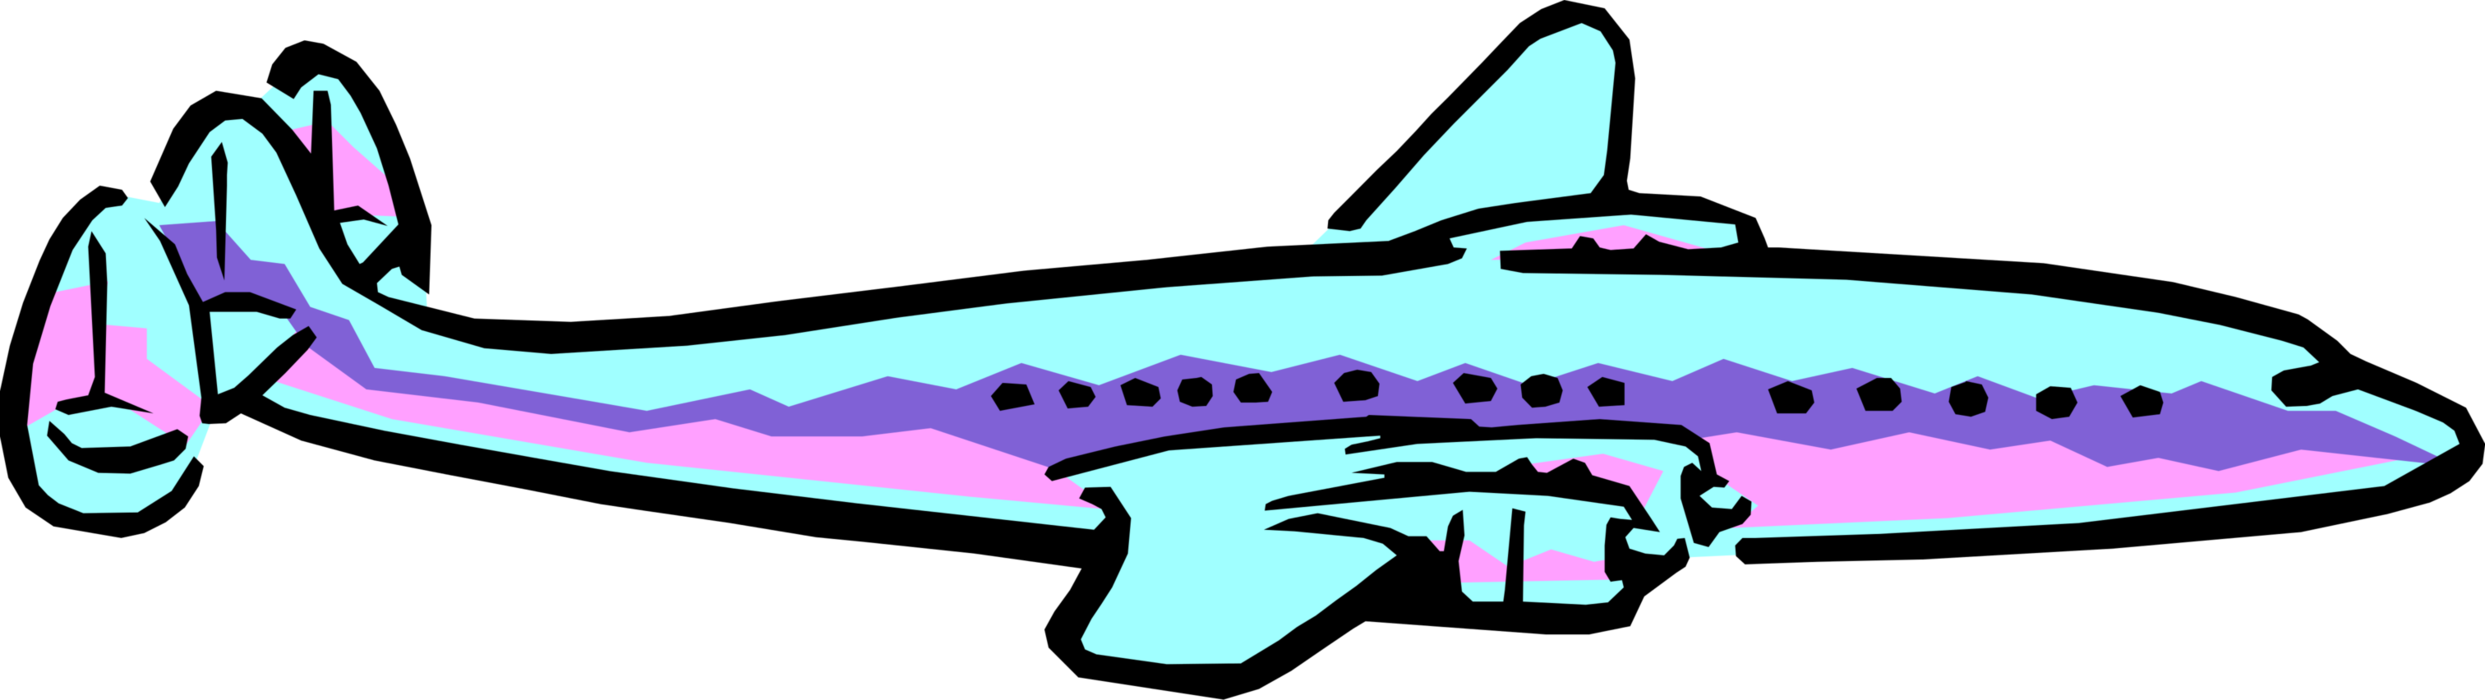 Vector Illustration Of Propeller Driven Passenger Plane - Illustration (2485x700)